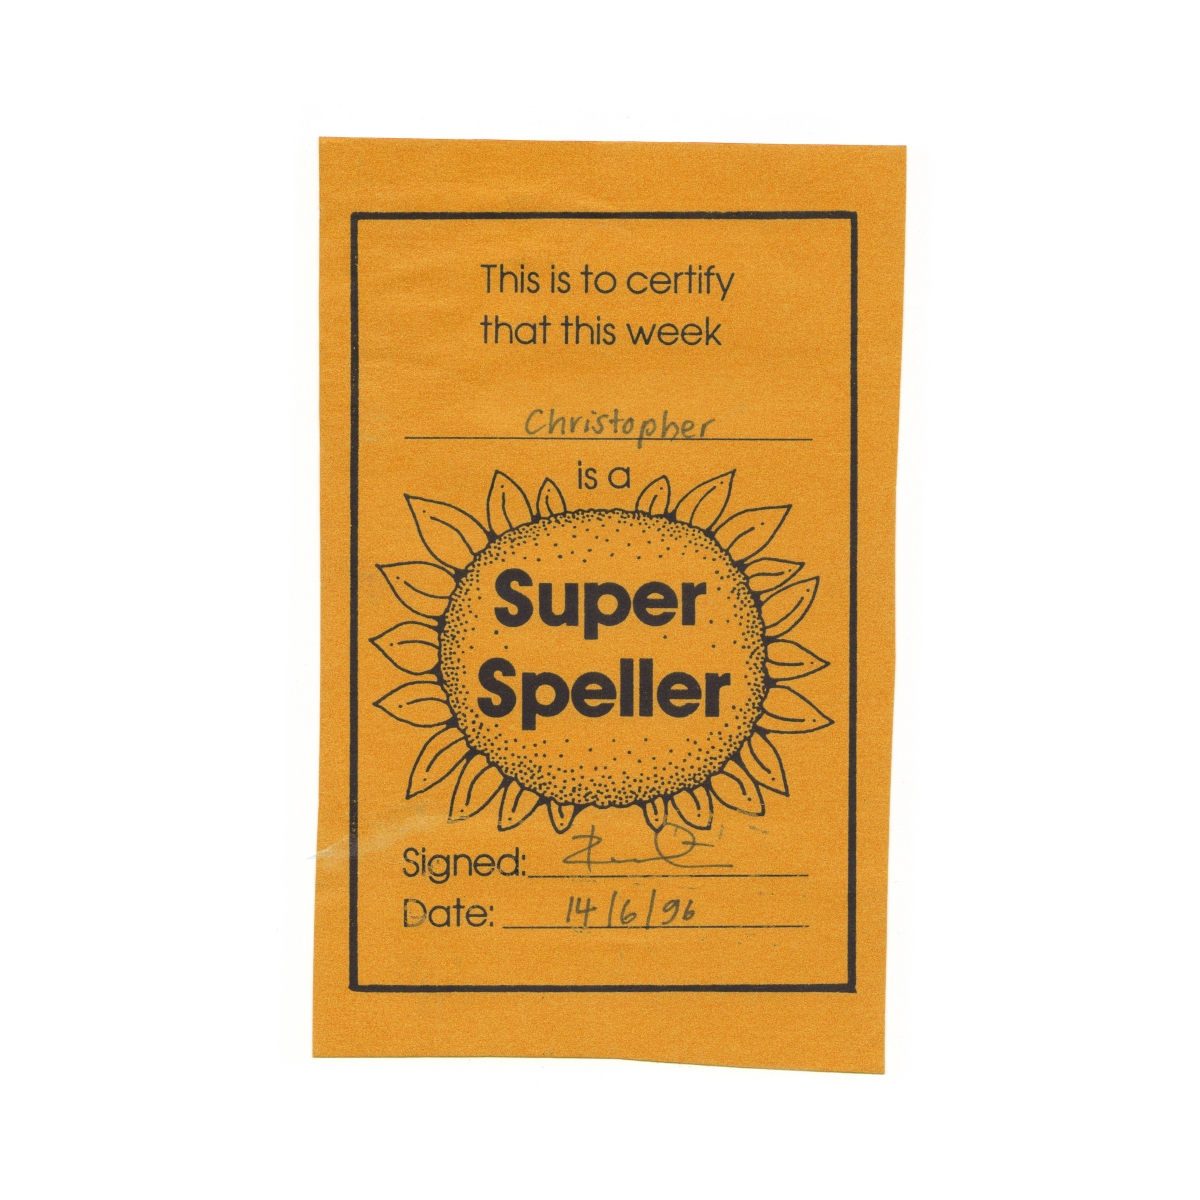 Super speller certificate.